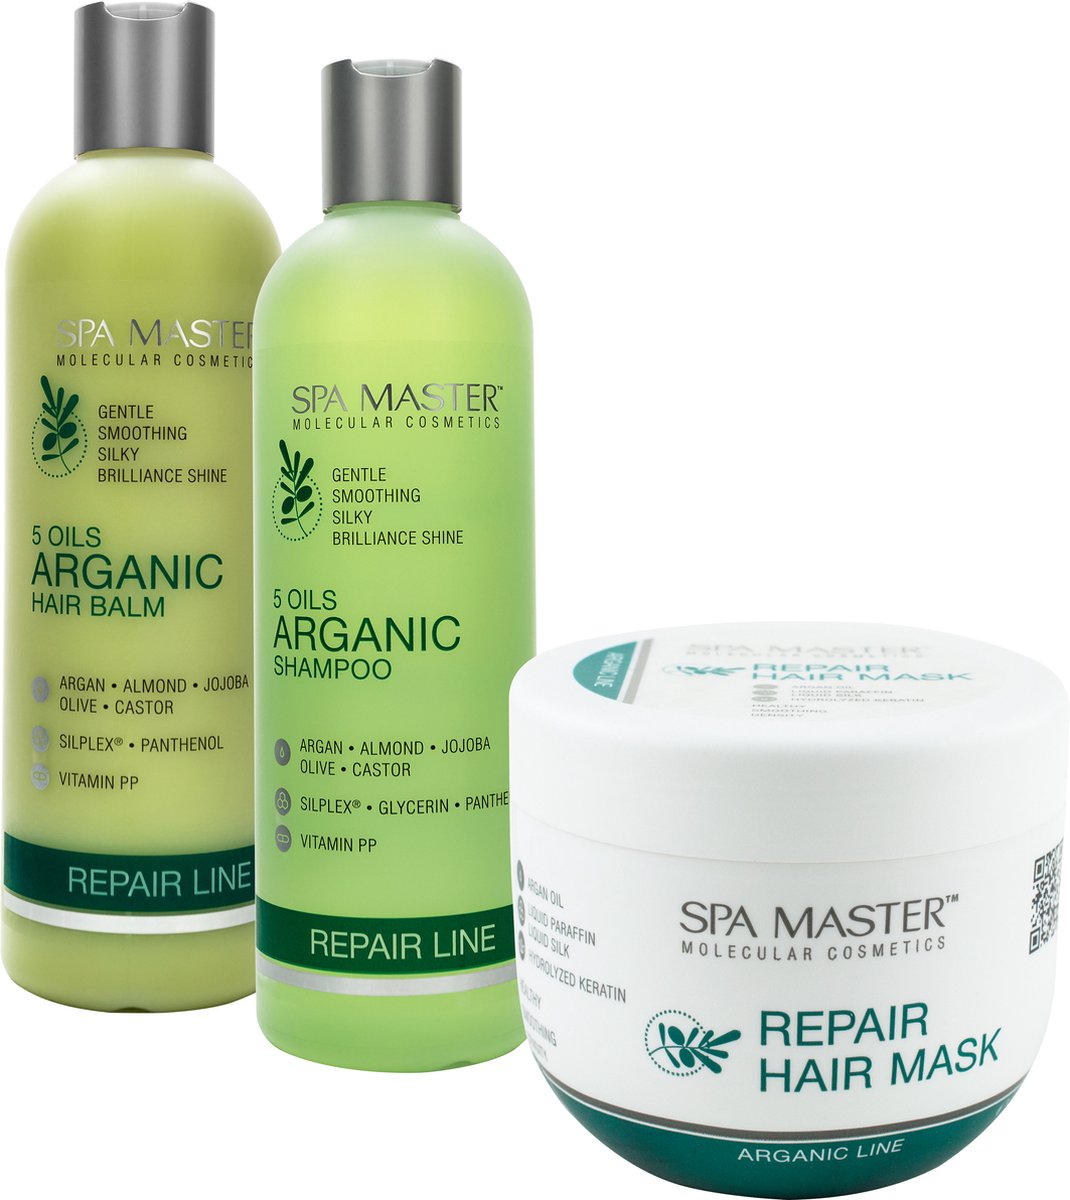 Spa Master Argan Voordeelset - Shampoo + Conditioner + Haarmasker - Arganolie - Samen 1,16L